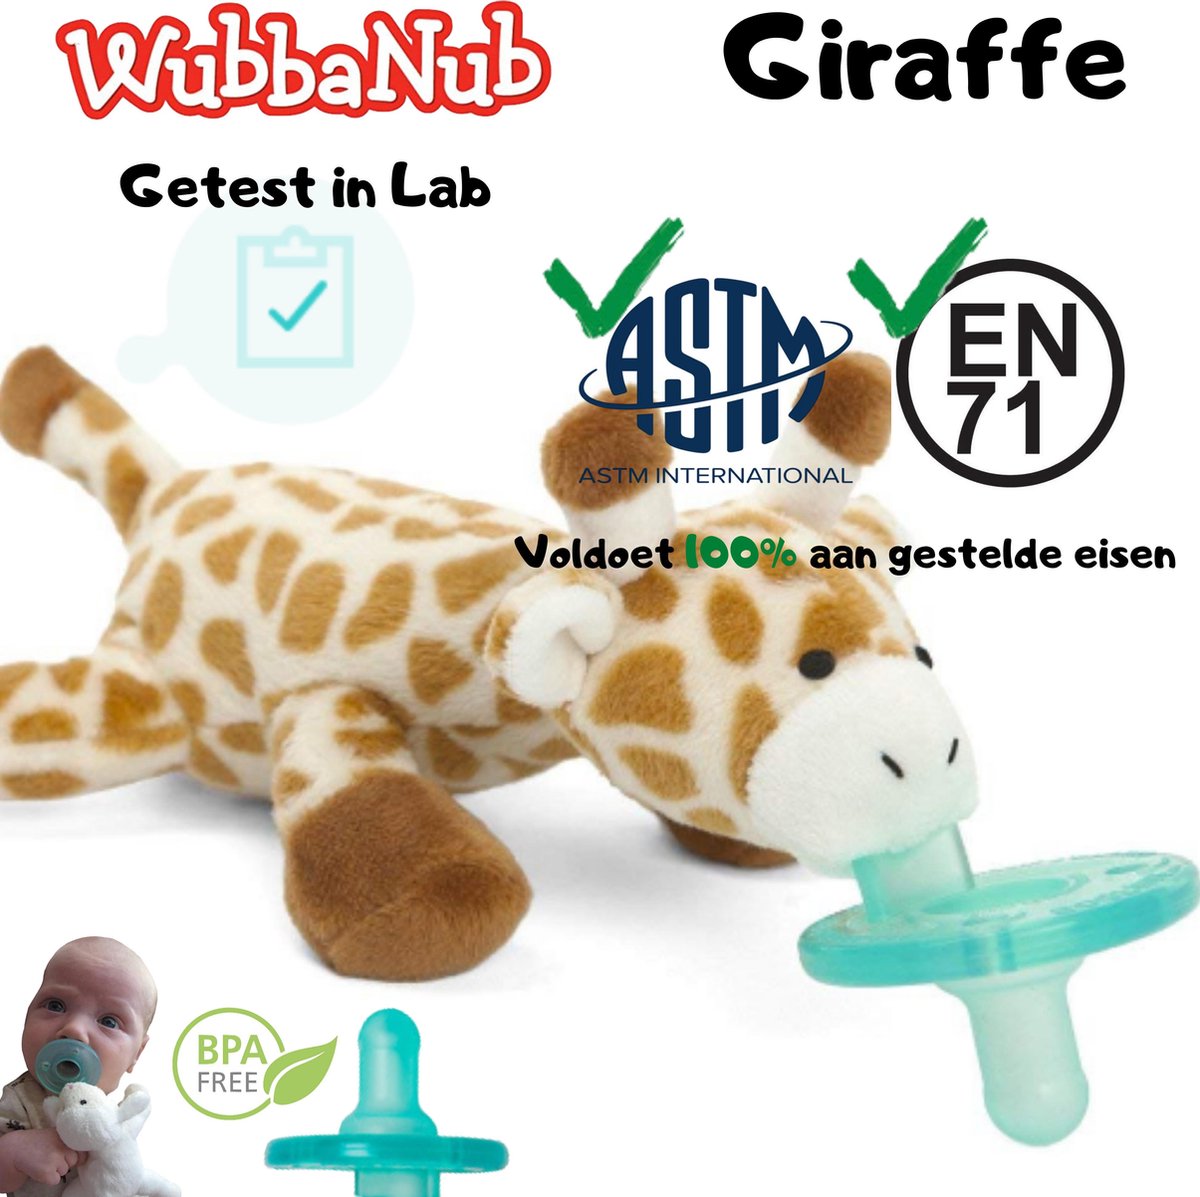 Wubbanub Giraffe Speenknuffel - De knuffel speen is BPA vrij en  Eco-vriendelijk - ASTM... | bol.com